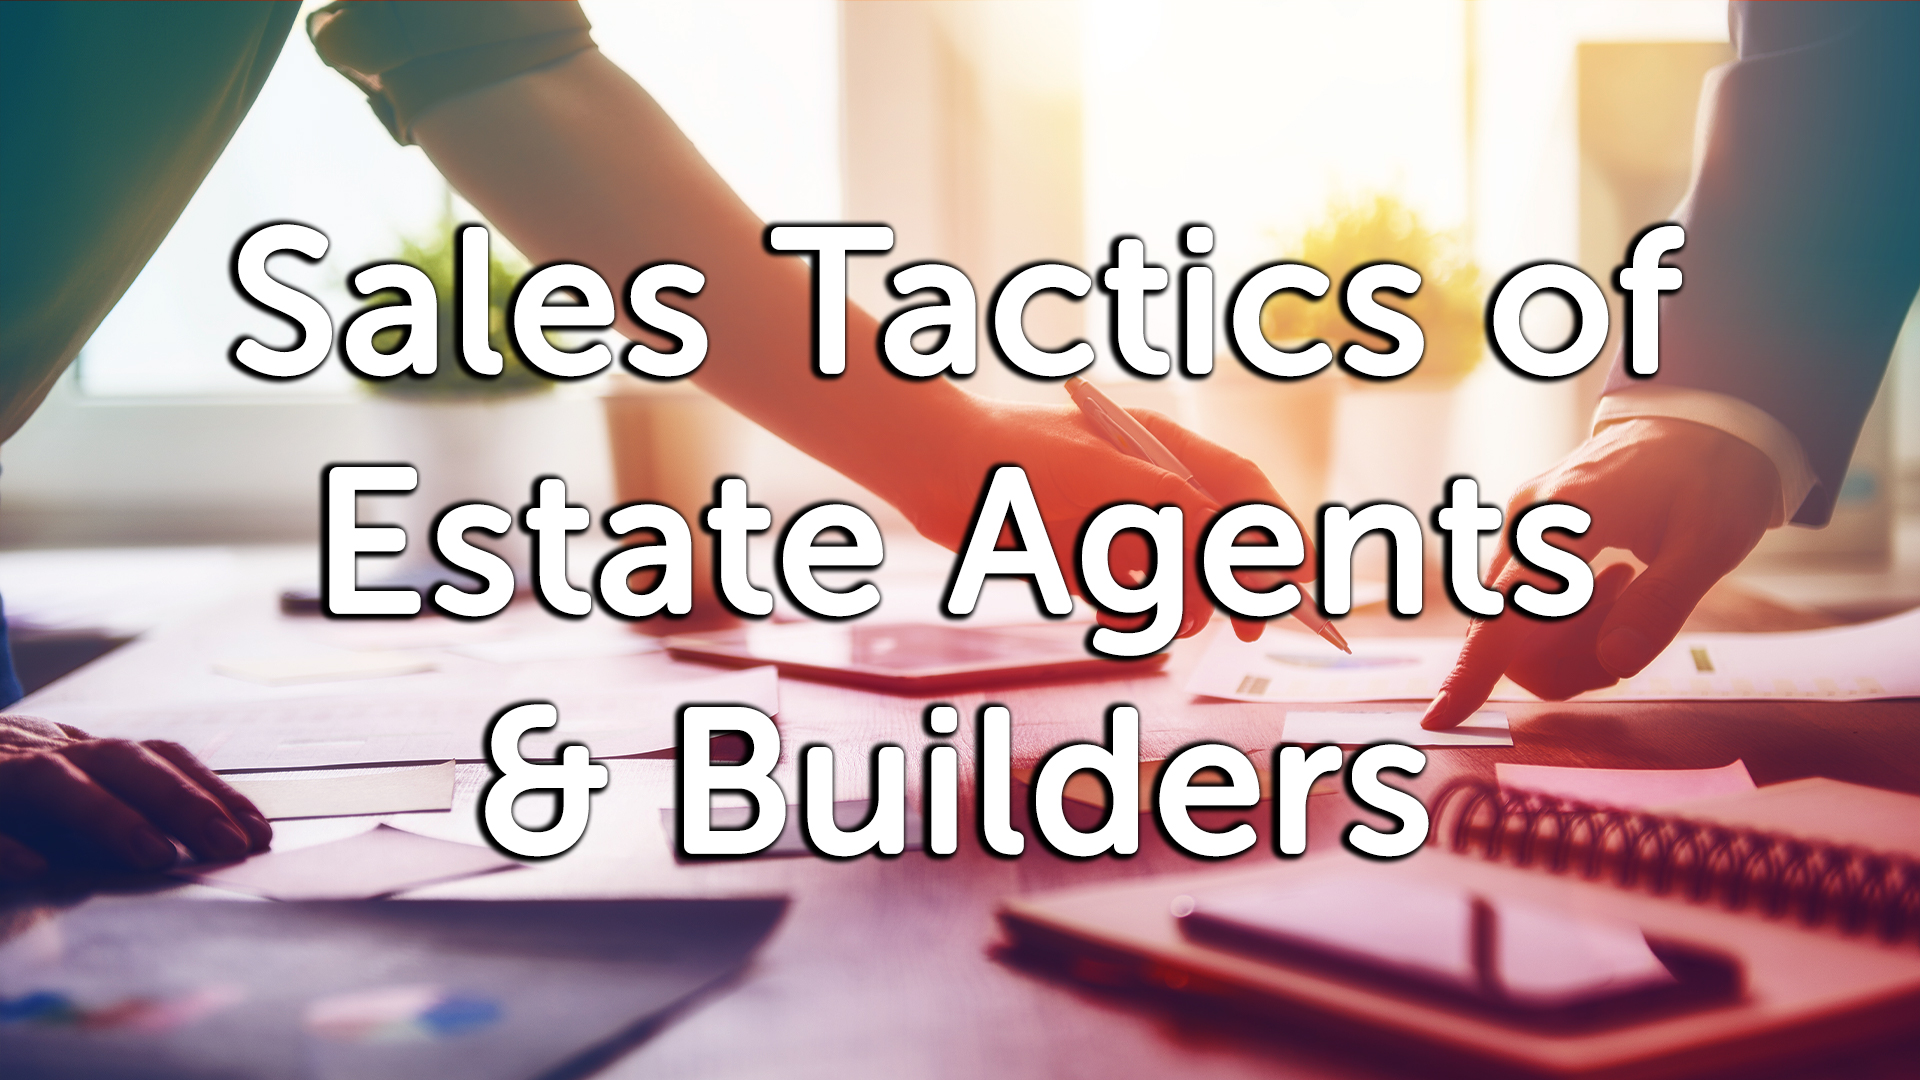 Sales Tactics of Estate Agents & Builders in Derby